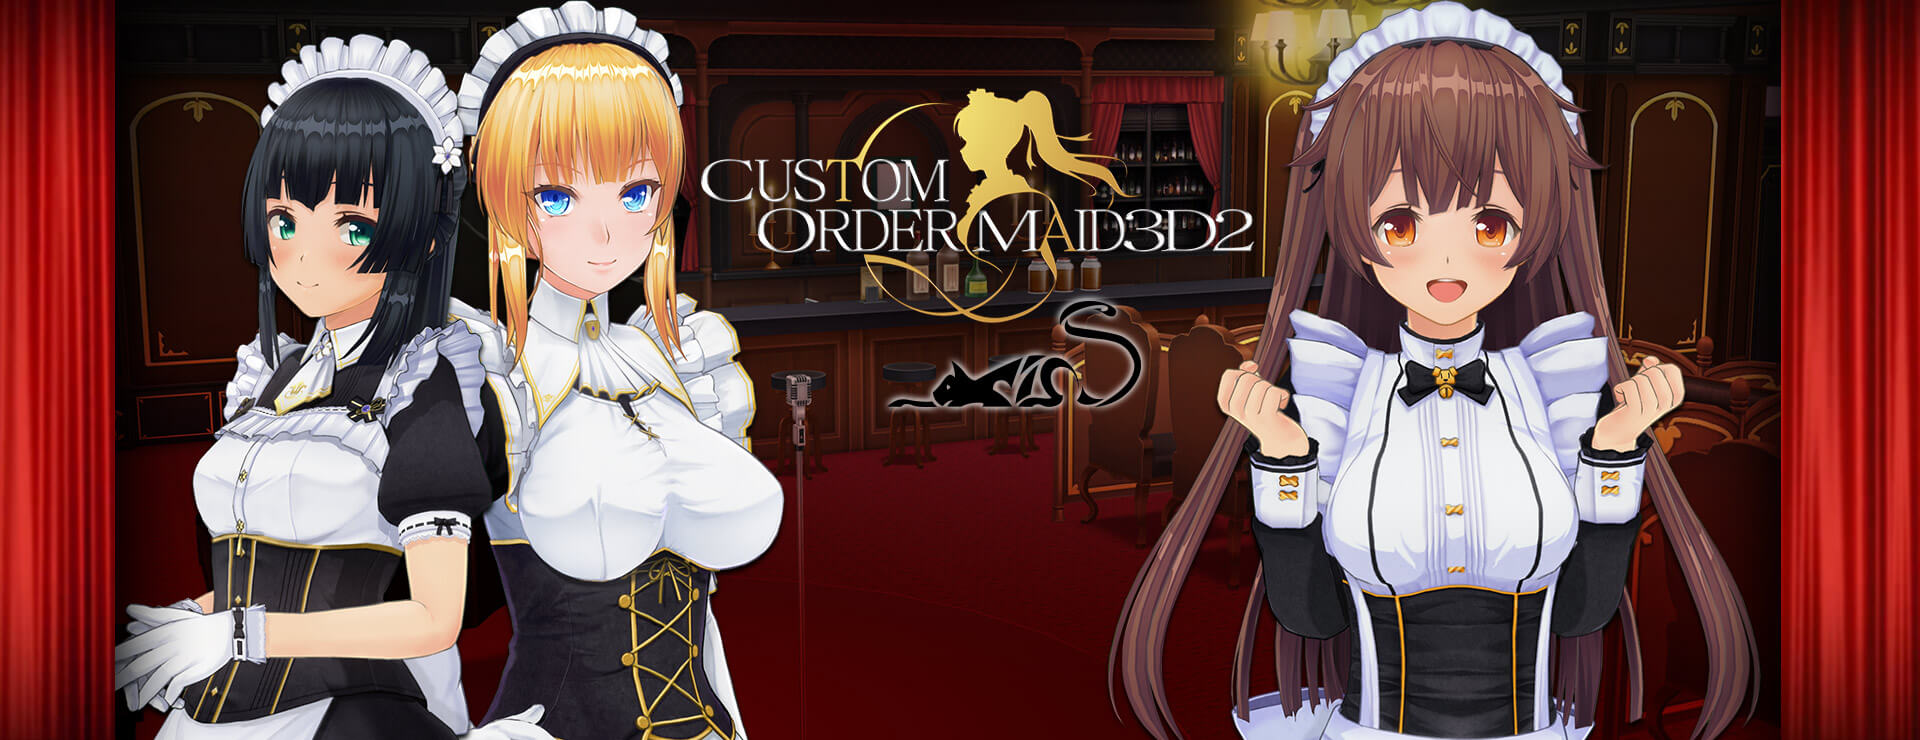 Custom Order Maid 3D2 Enjoy Empire Life GP-01 Bundle - Simulation Jeu